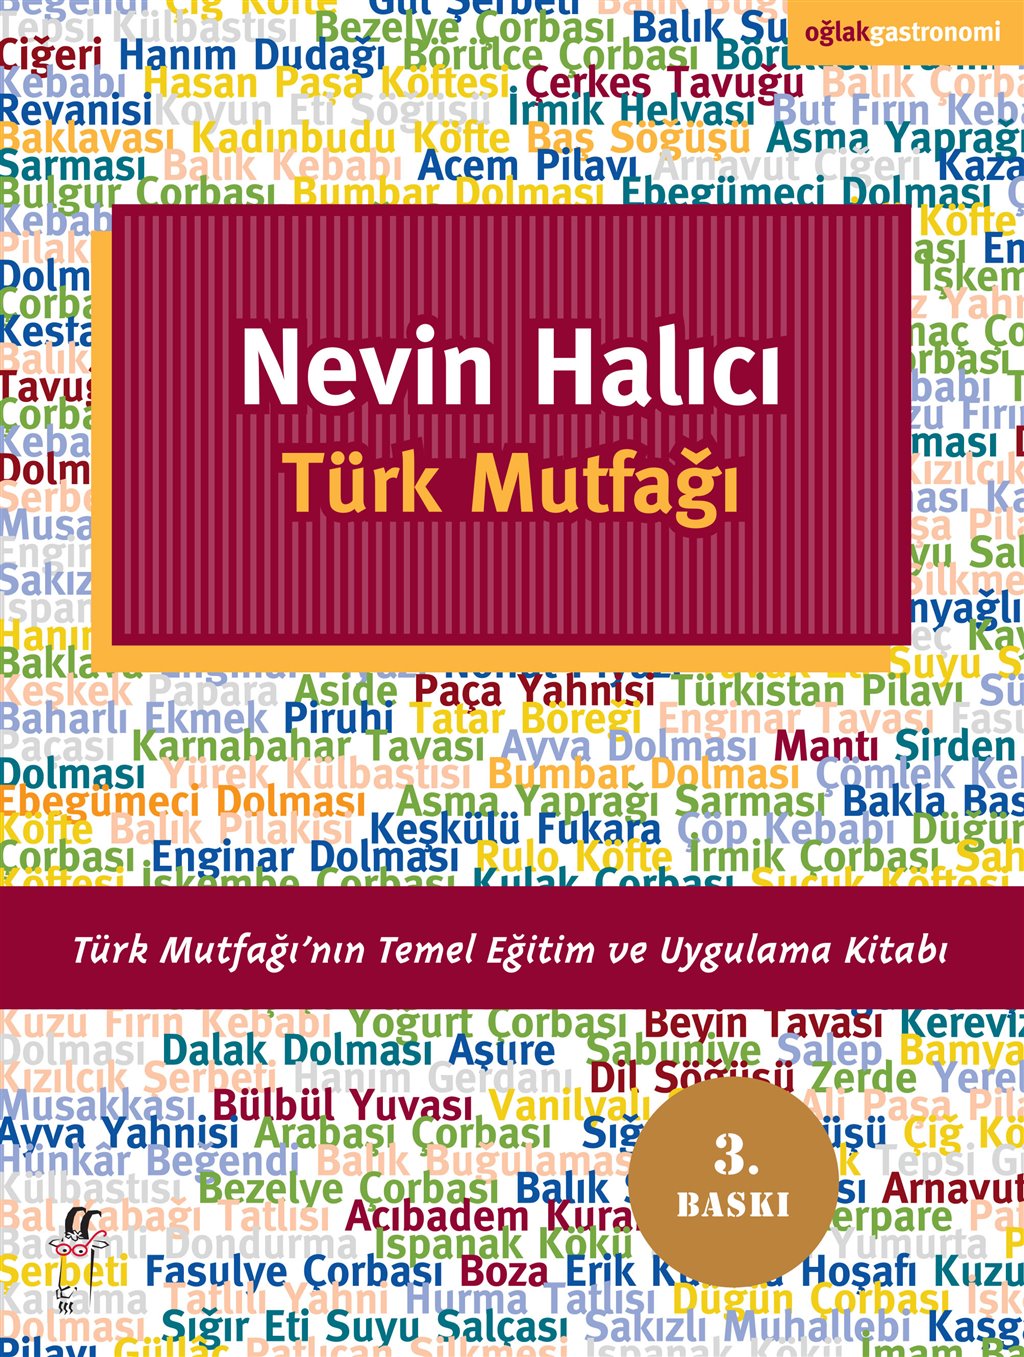 Turk-Mutfagi